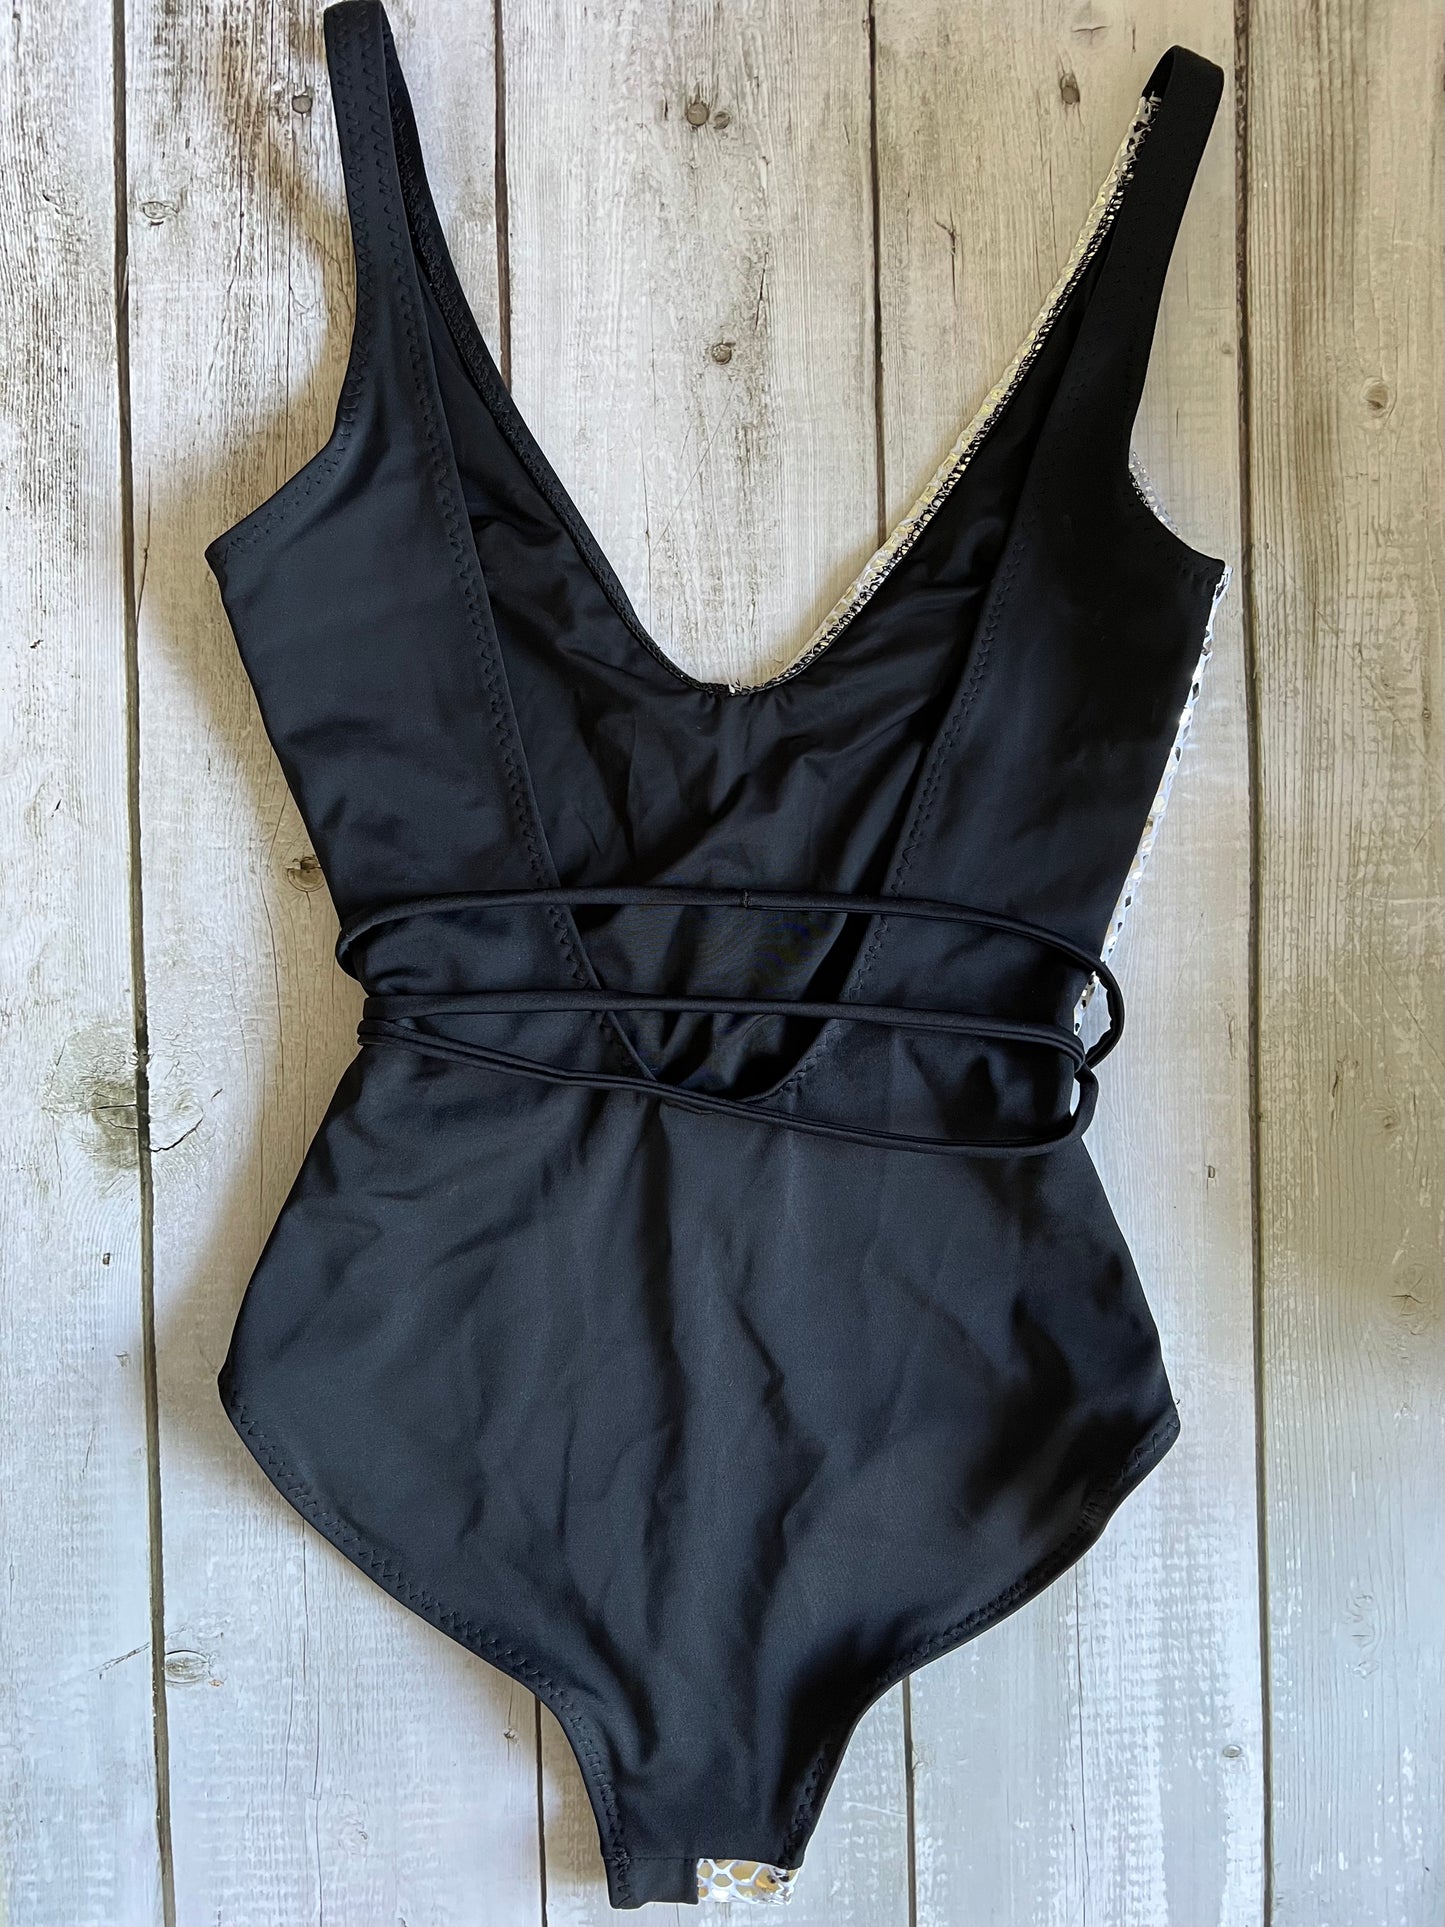 Black & Silver Snake Swimsuit - Size 8